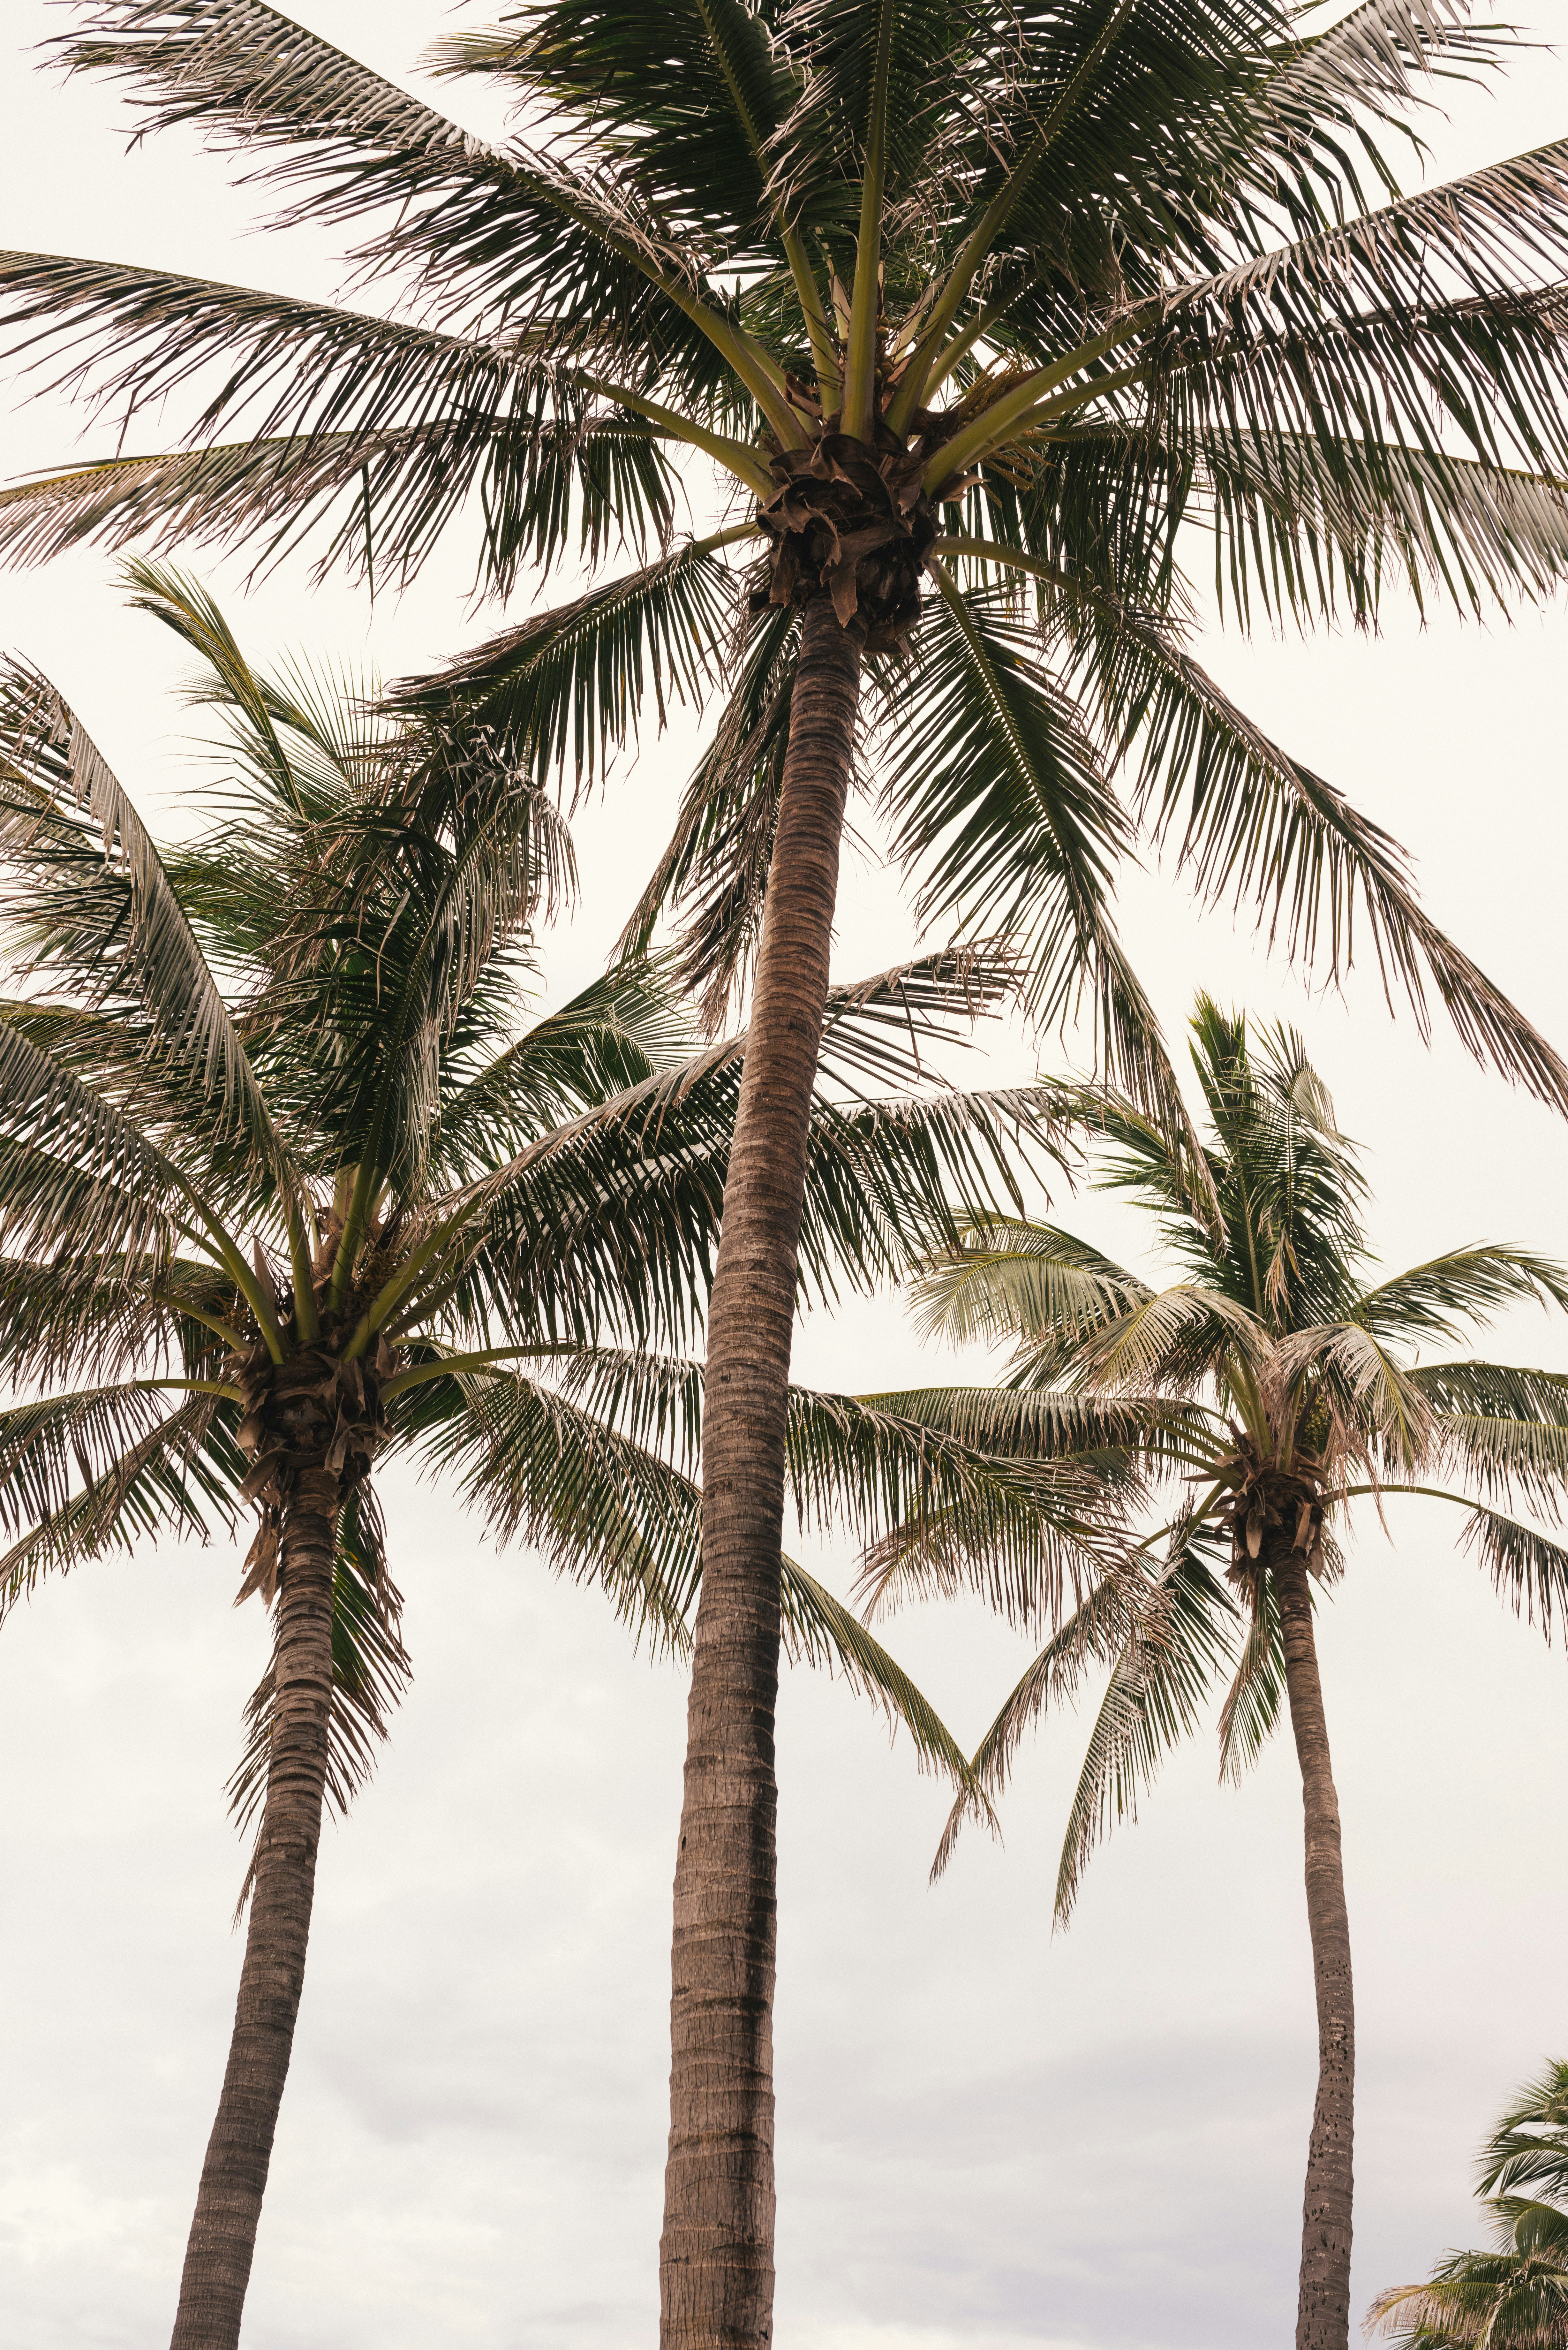 coconut trees photograph